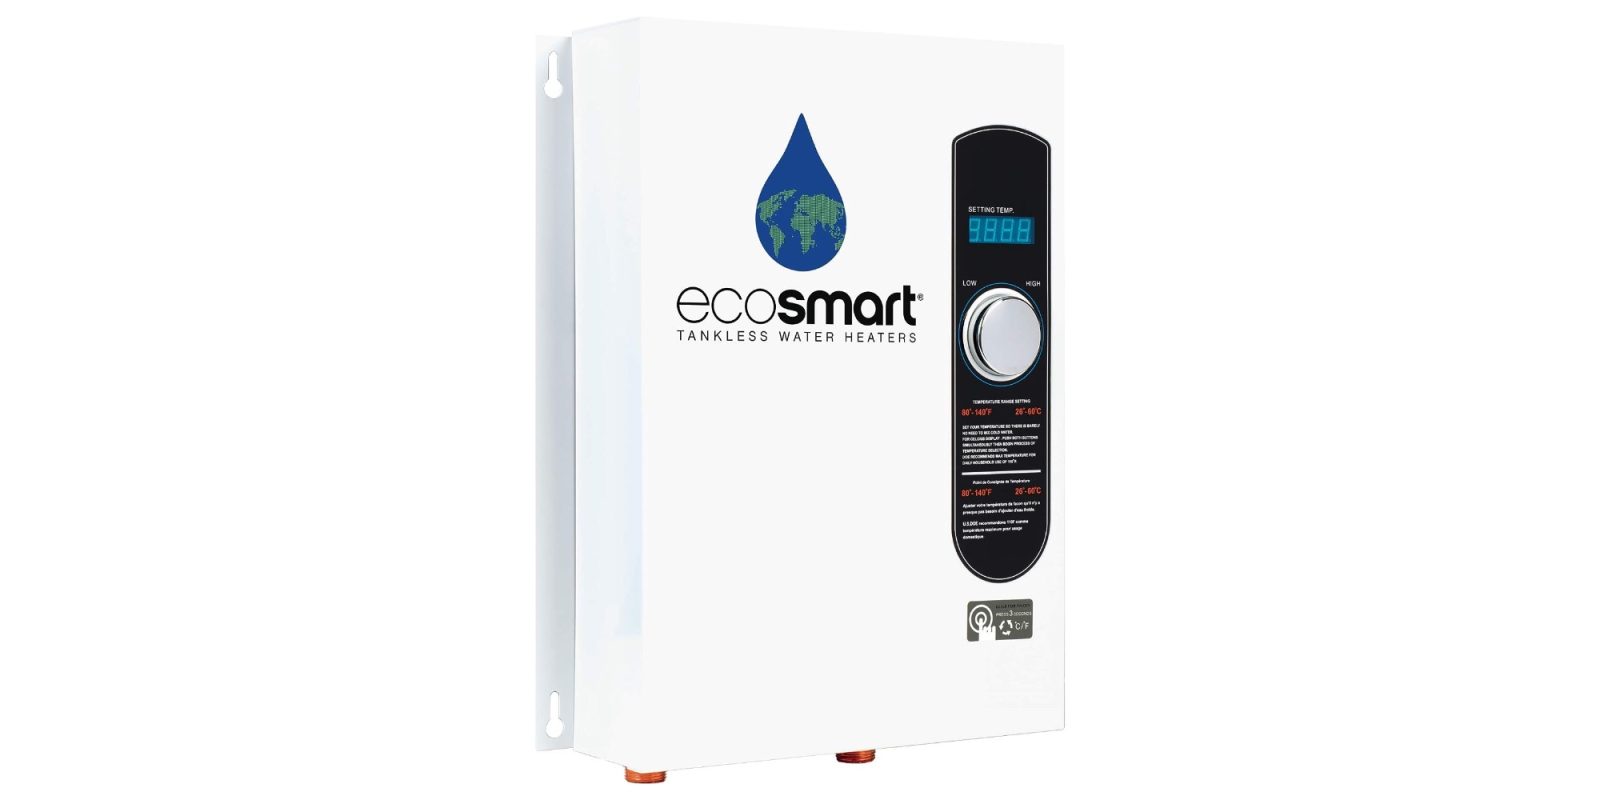 ecosmart eco 18 electric tankless water heater hits $319, schwinn 45-mile range e-bike $519 off, more